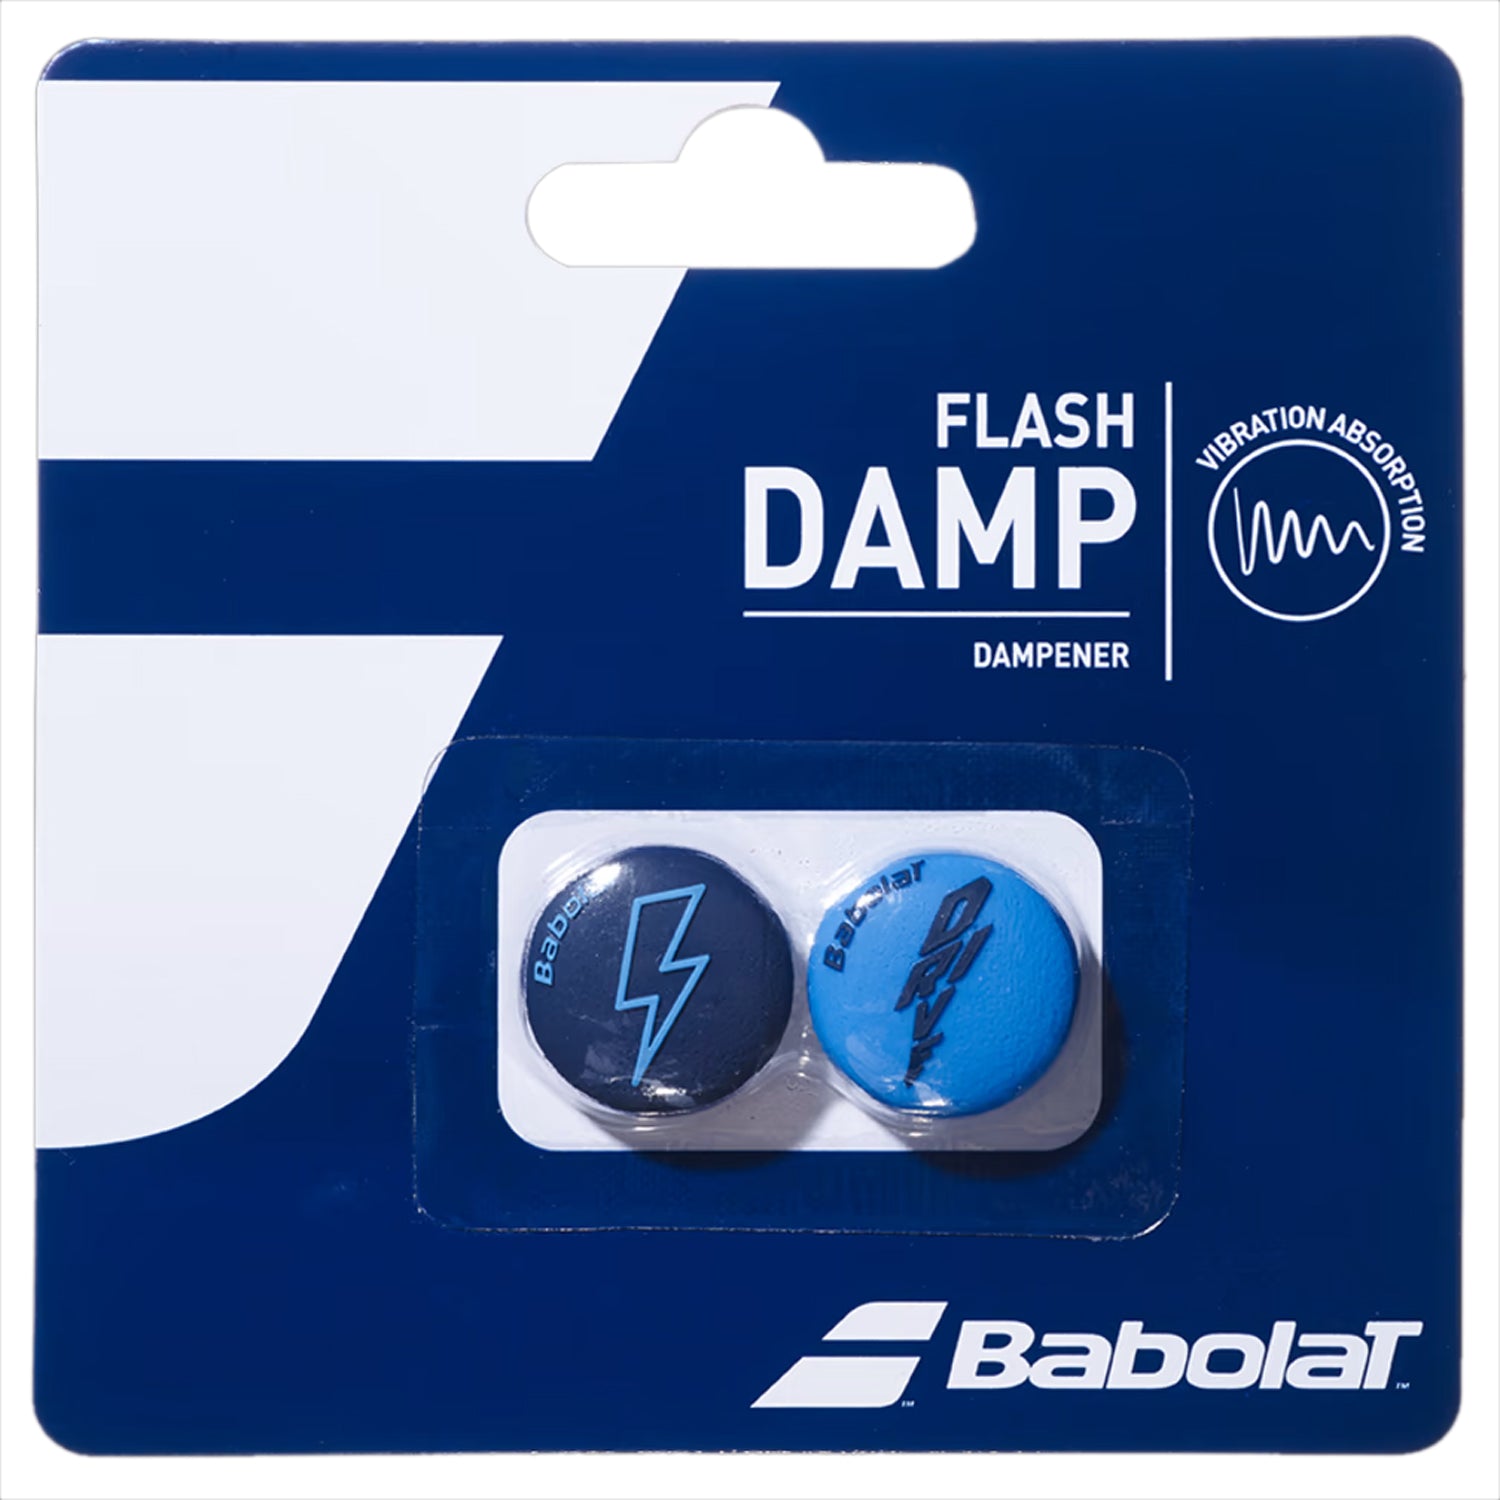 Babolat Flash Damp X2 Dampener, Blue/Black - Best Price online Prokicksports.com